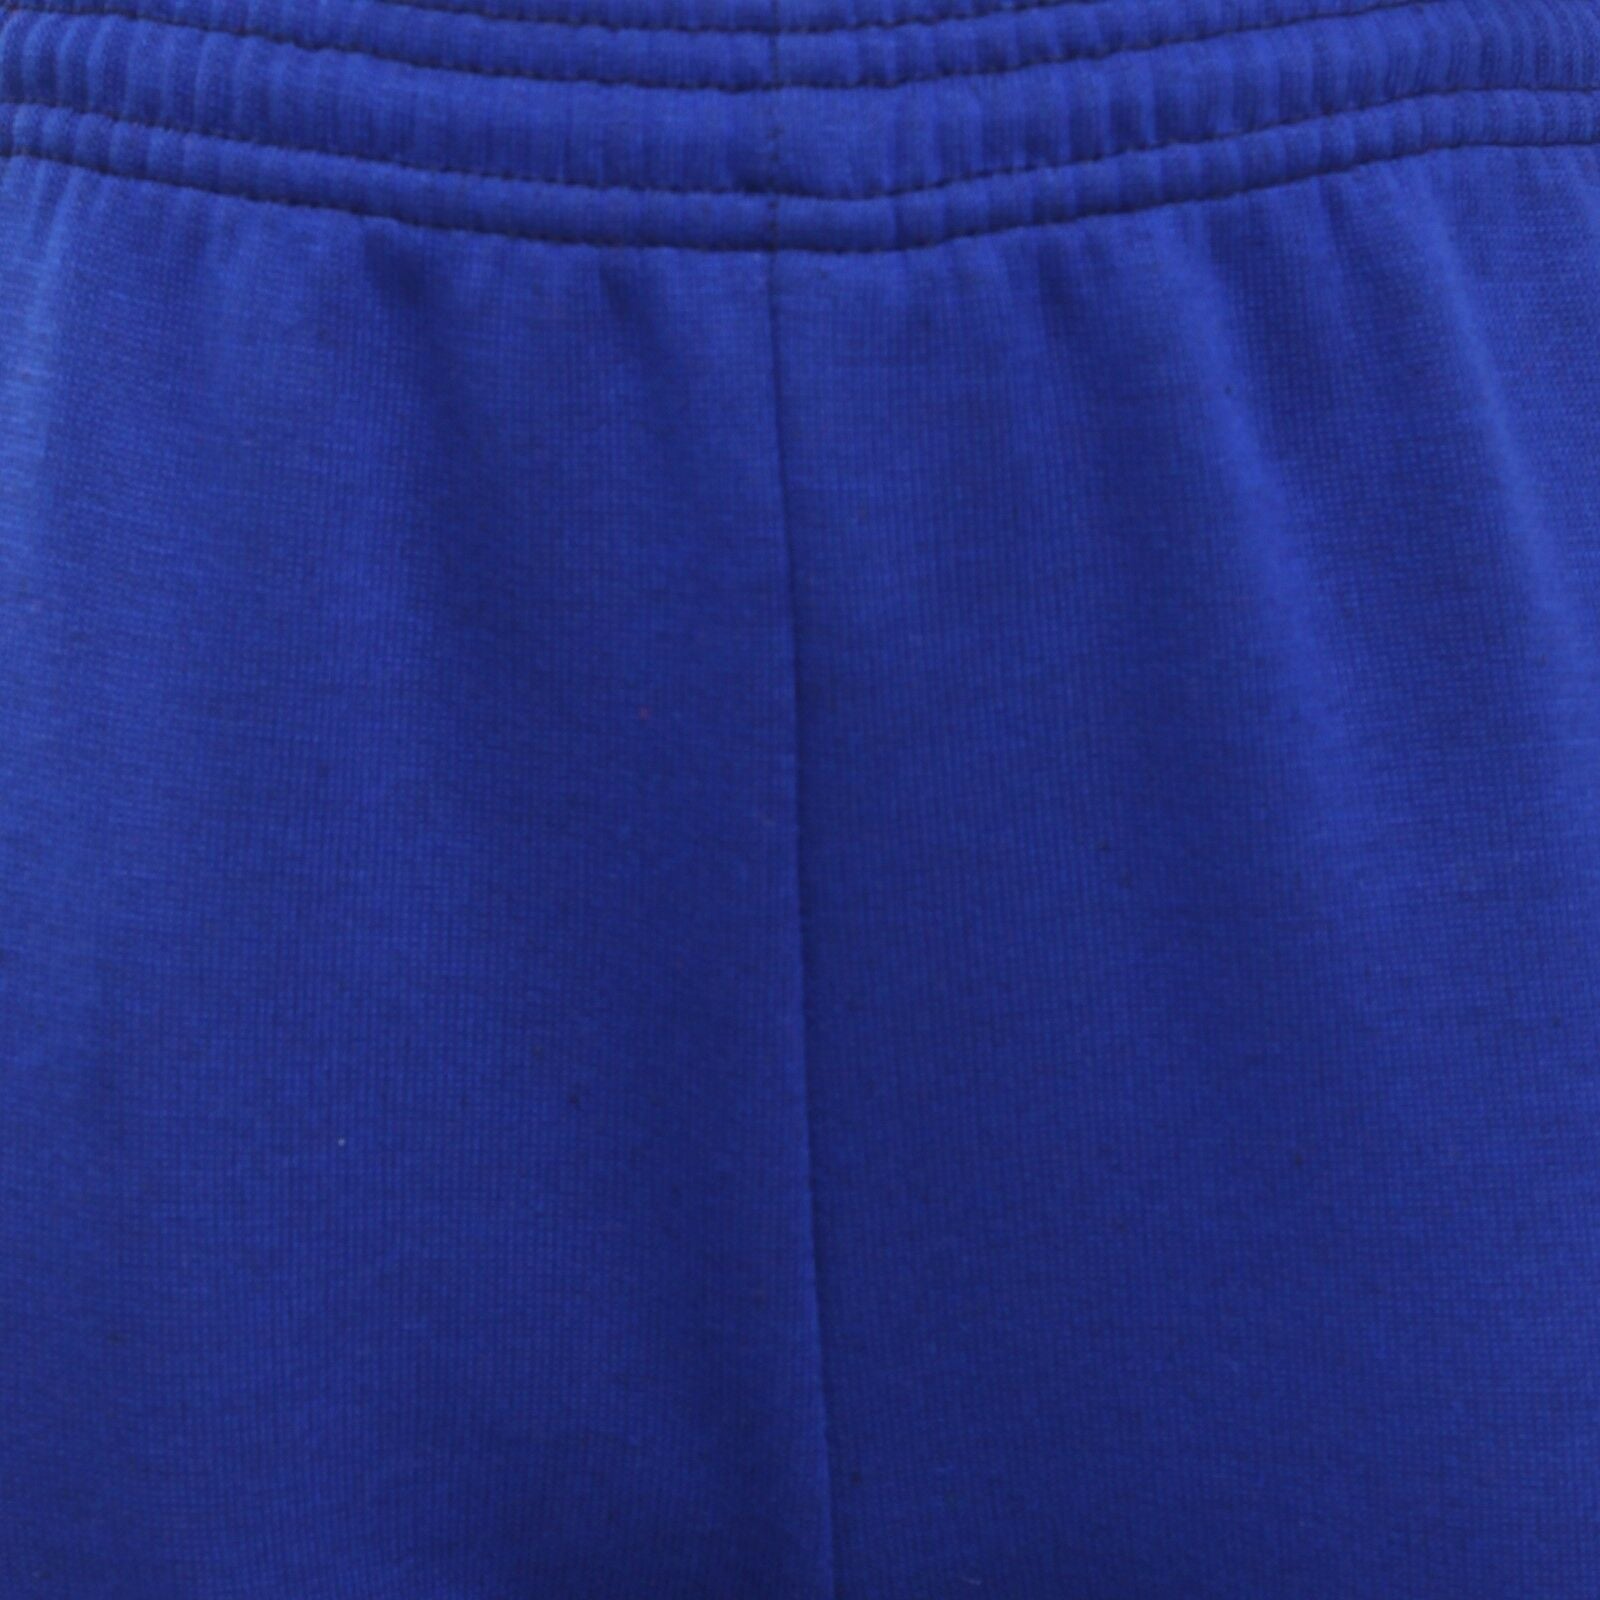 Trousers Joggers Pants Fleece PE Gym School Jogging Bottoms Unisex Boys Girls Royal Blue